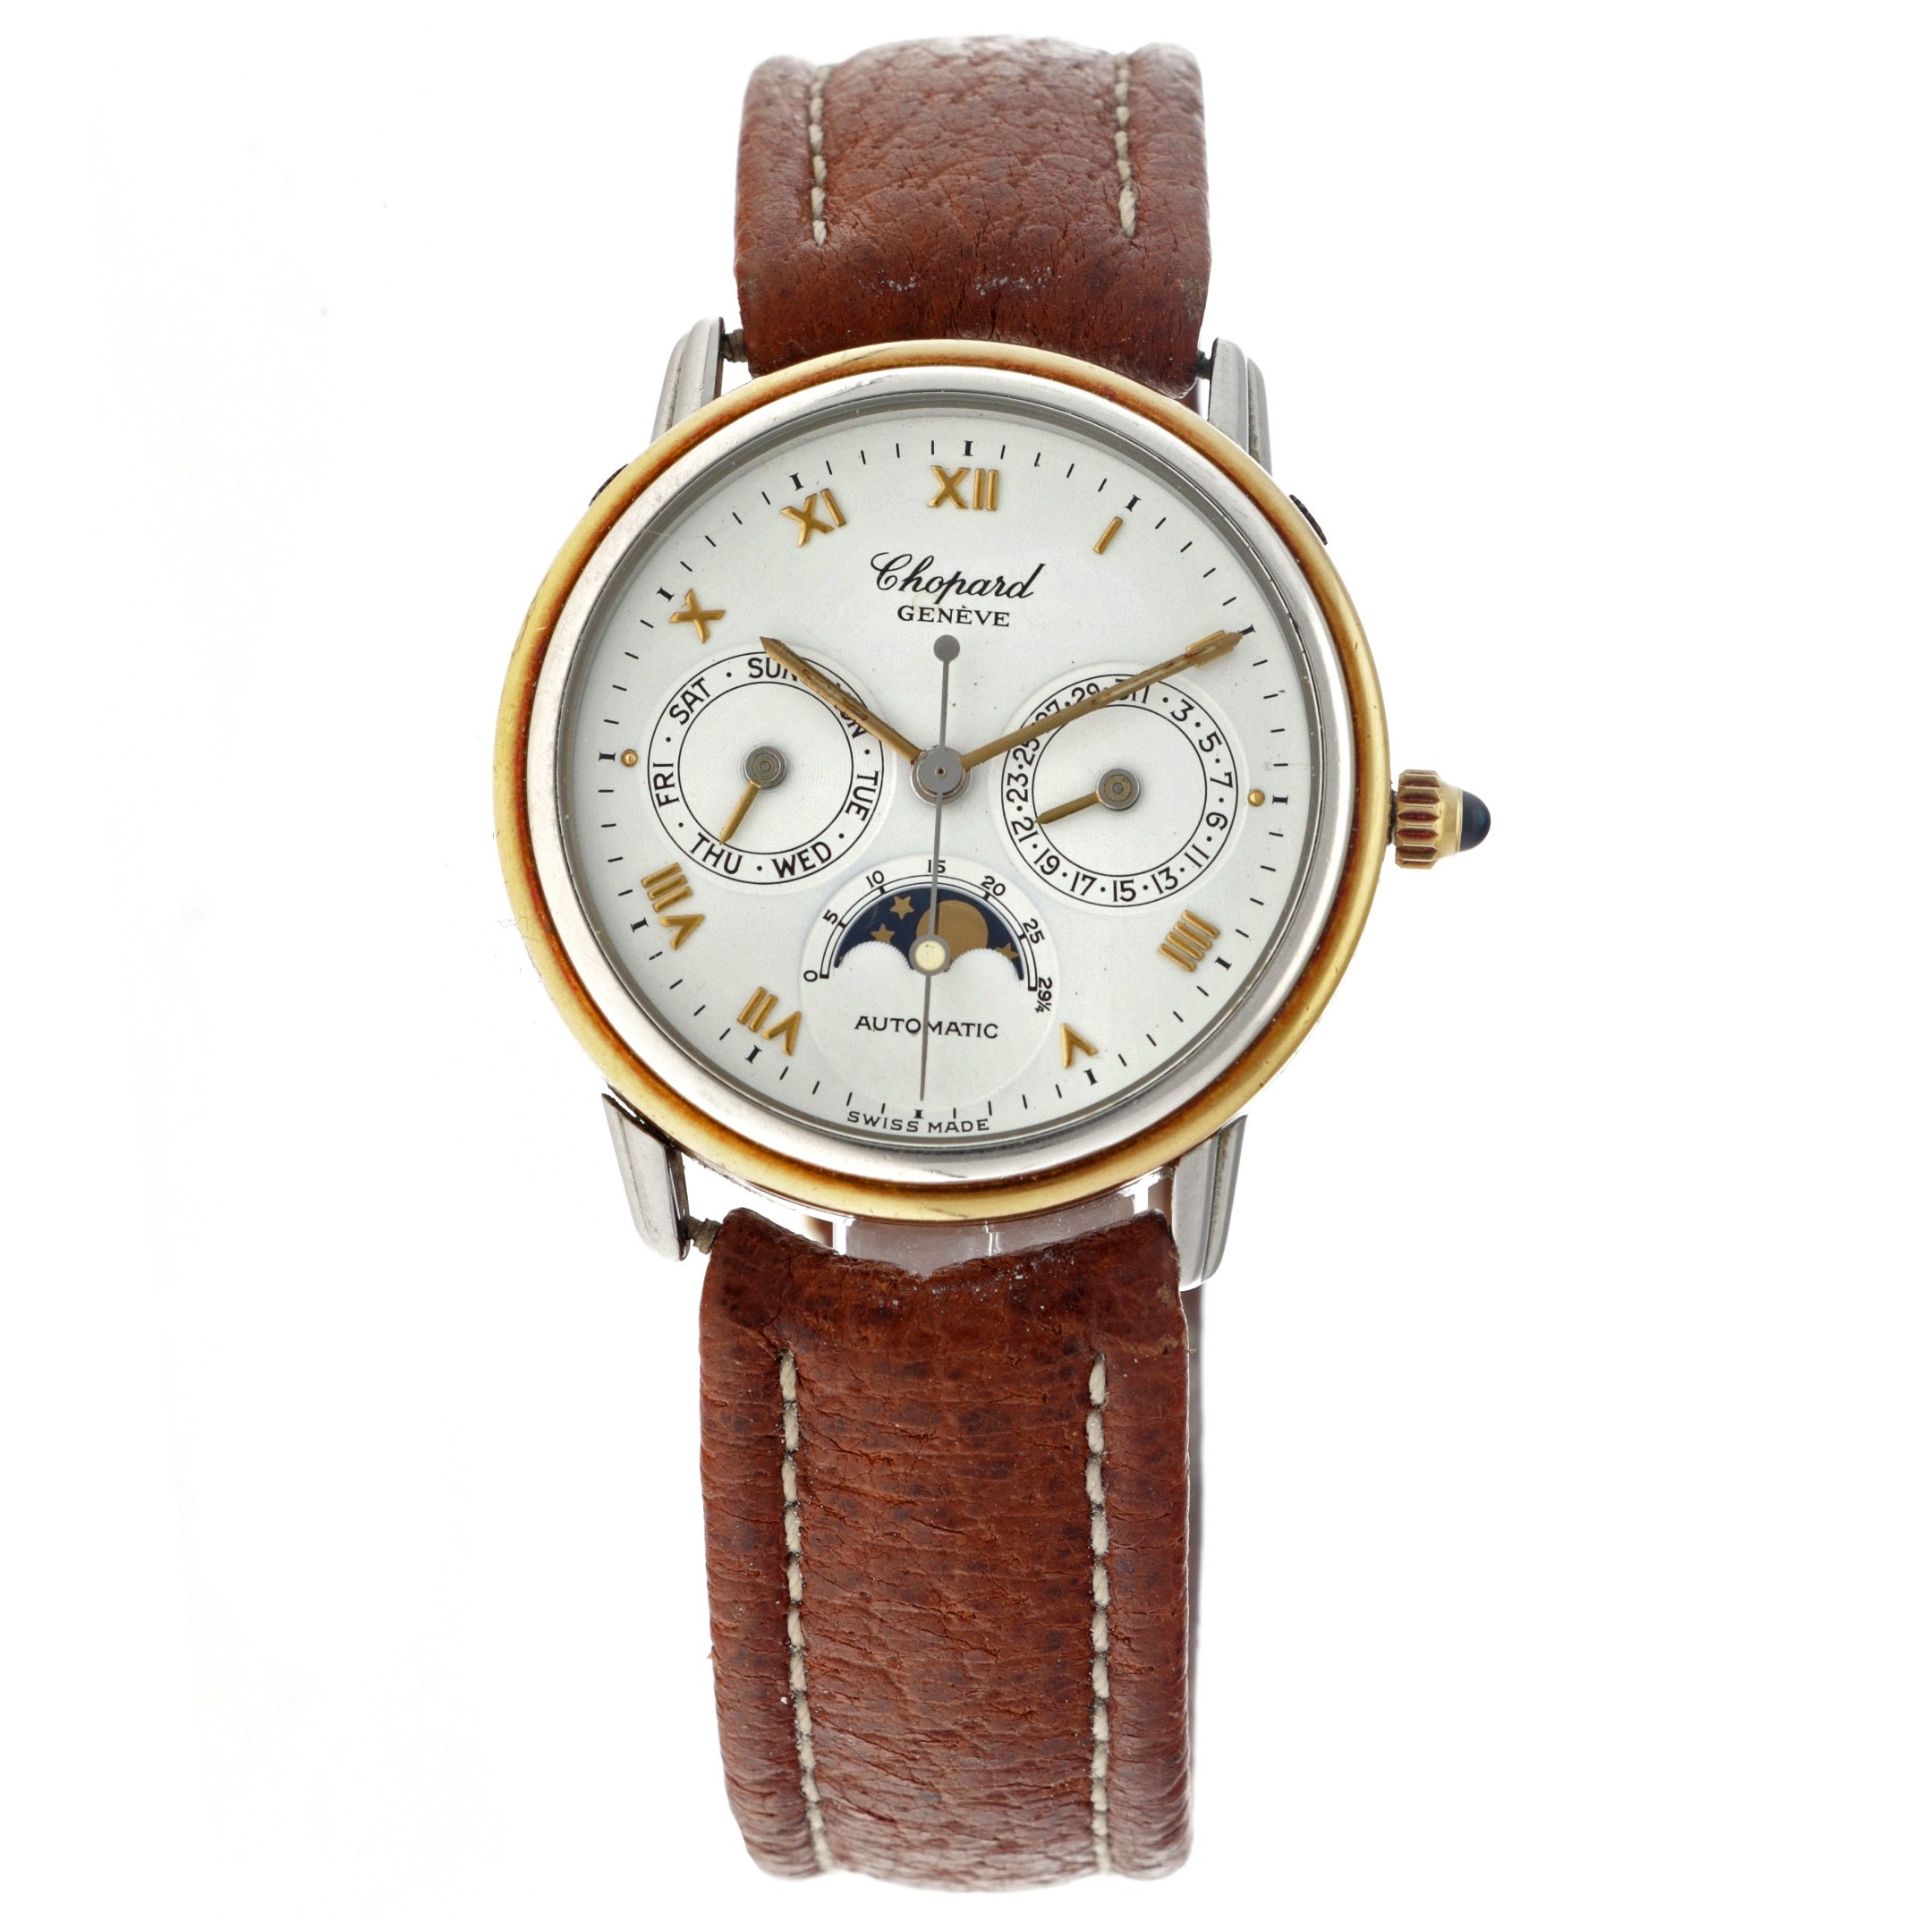 No Reserve - Chopard Luna d'Oro Moonphase 8131 - Men's watch.